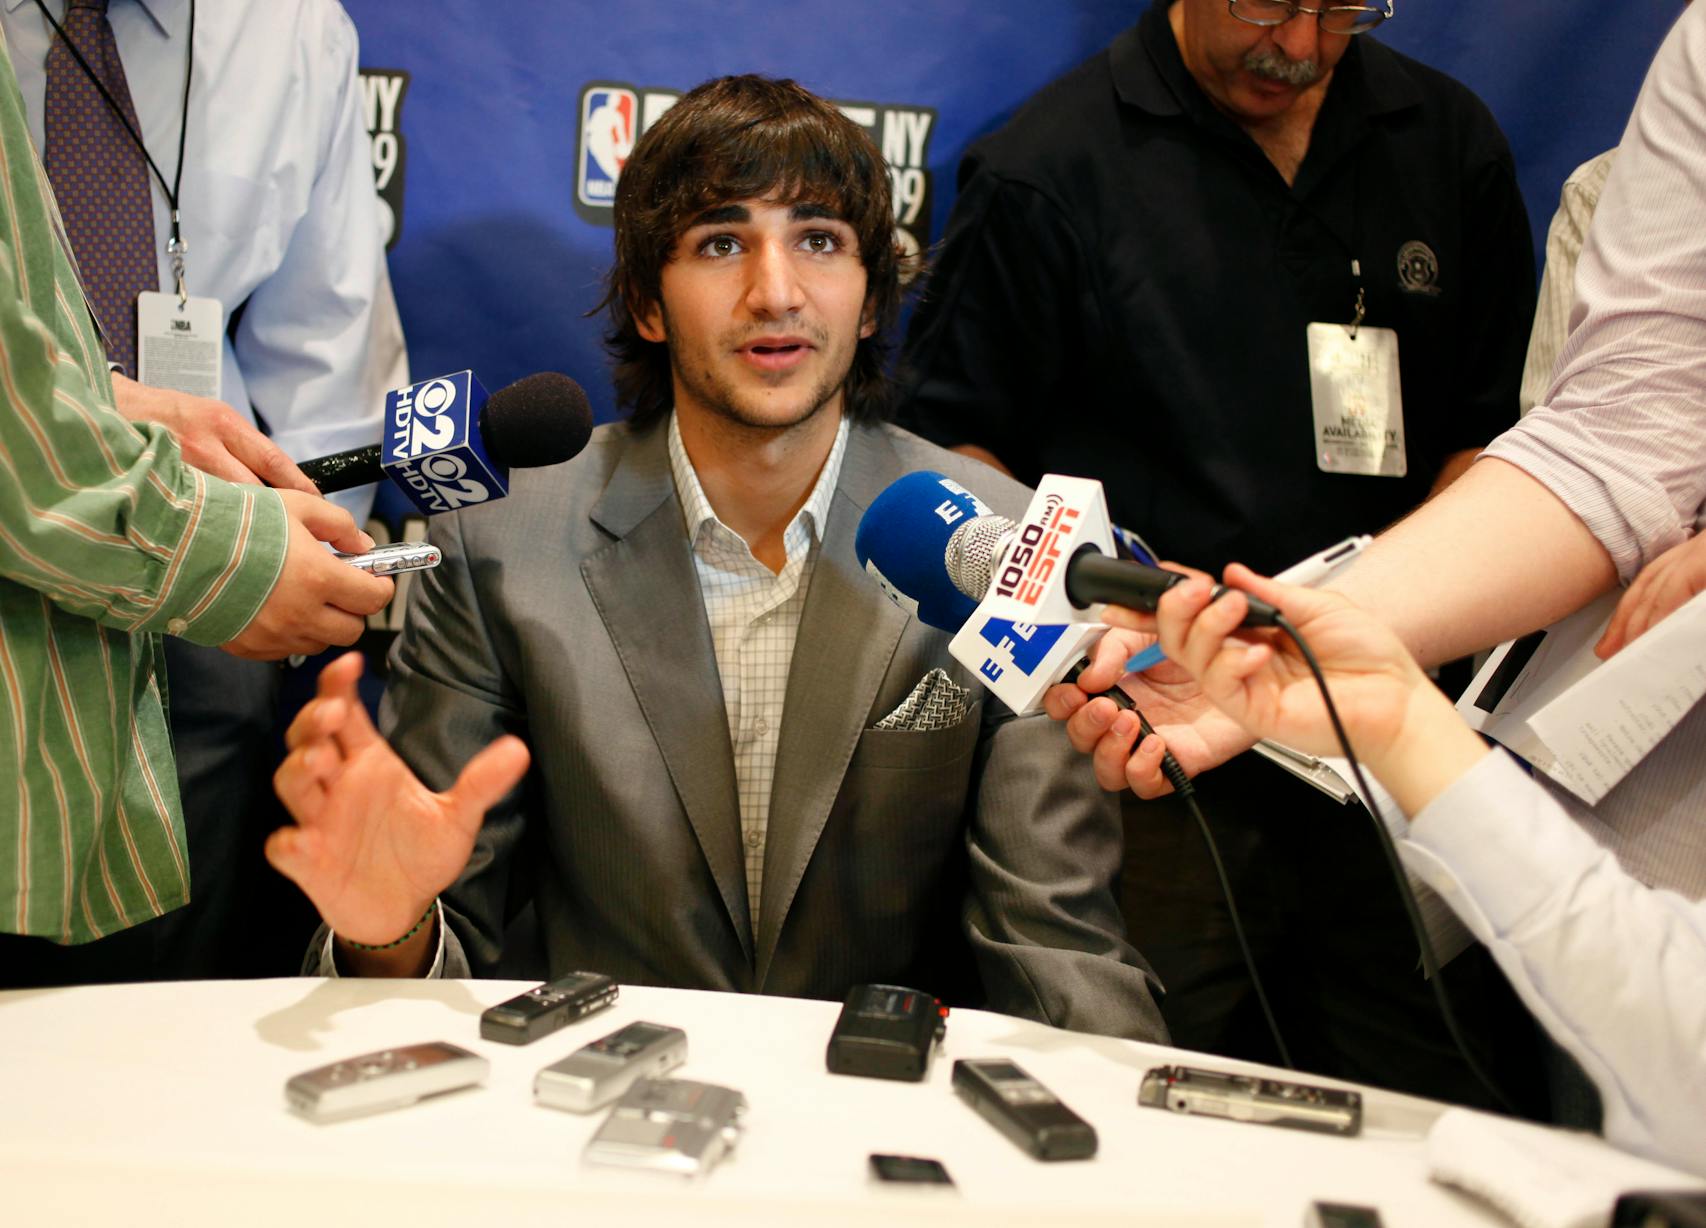 NBA draft prospect Ricky Rubio, of Spain, speaks to reporters in New York on June 24, 2009.